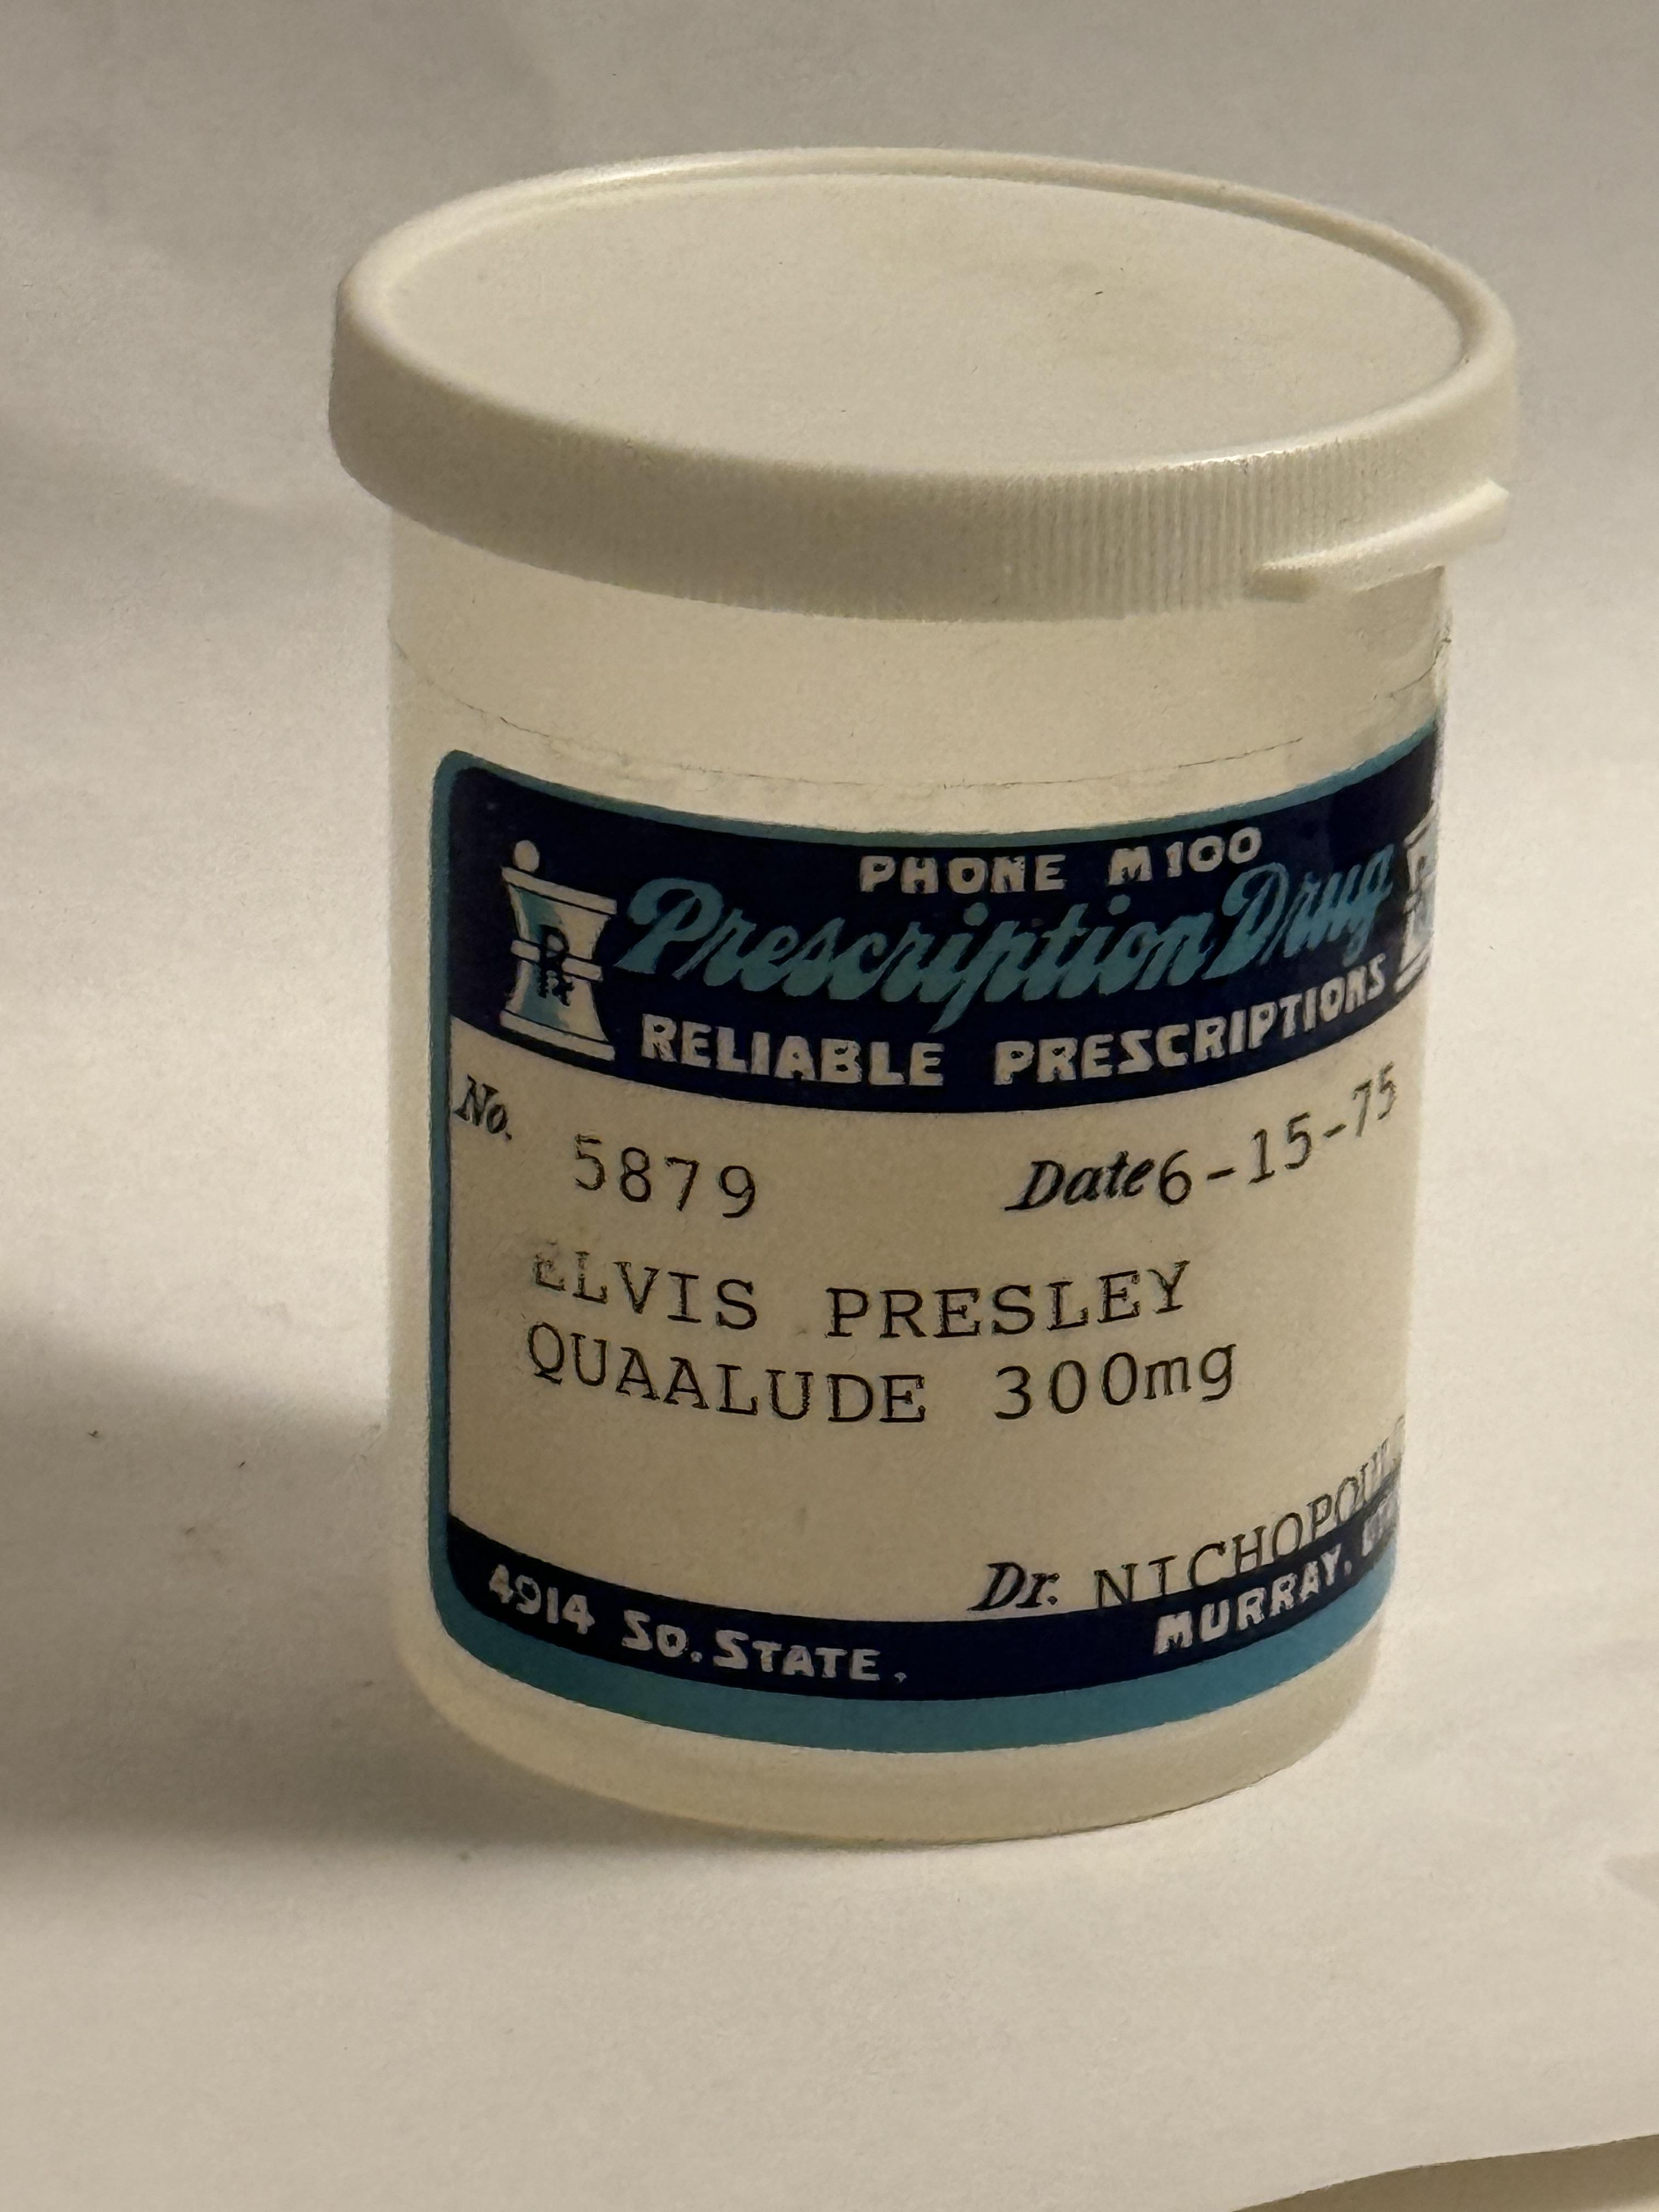 Elvis Presley QUAALUDE prescription bottle - Image 2 of 6